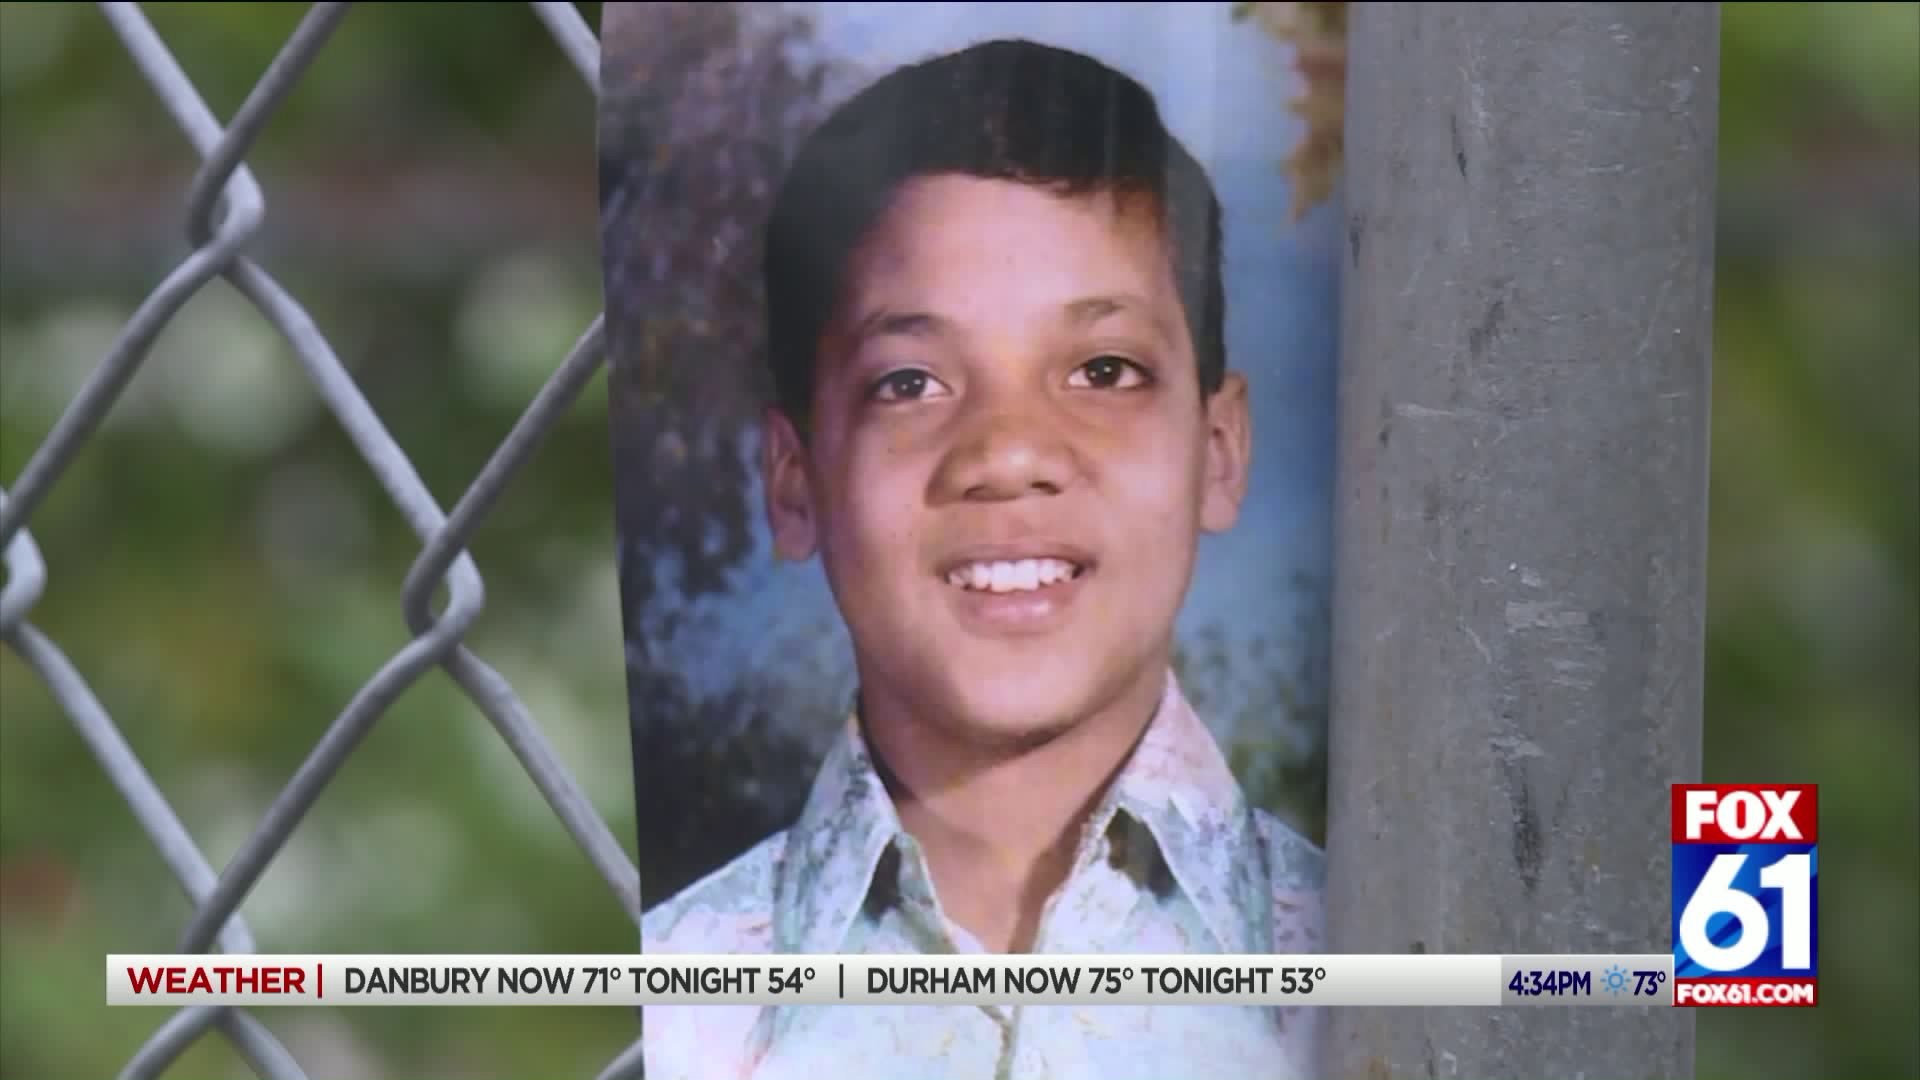 The boy who transformed public safety in Hartford: Remembering Julio Lozada